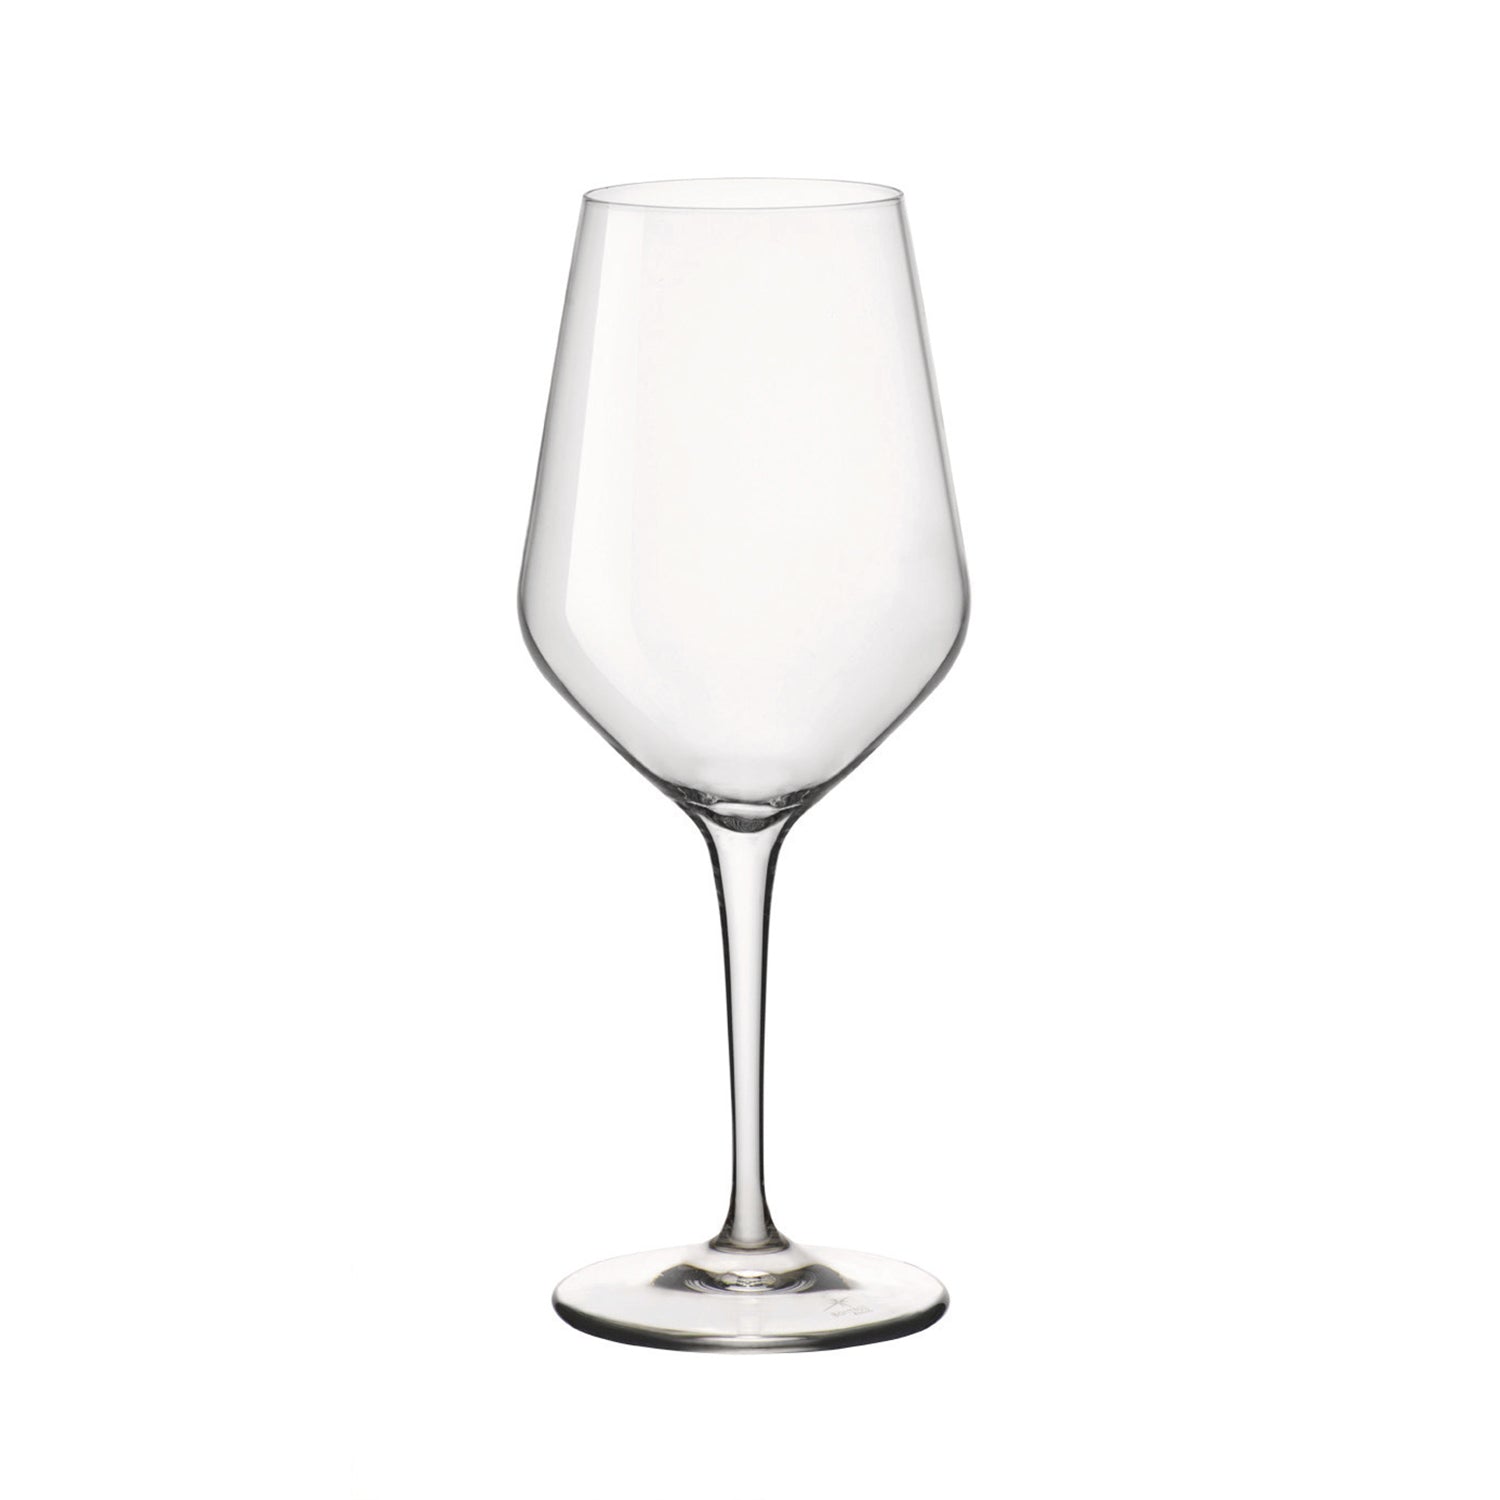 Bormioli Rocco Electra 14.75 oz. Medium Wine Glasses (Set of 6